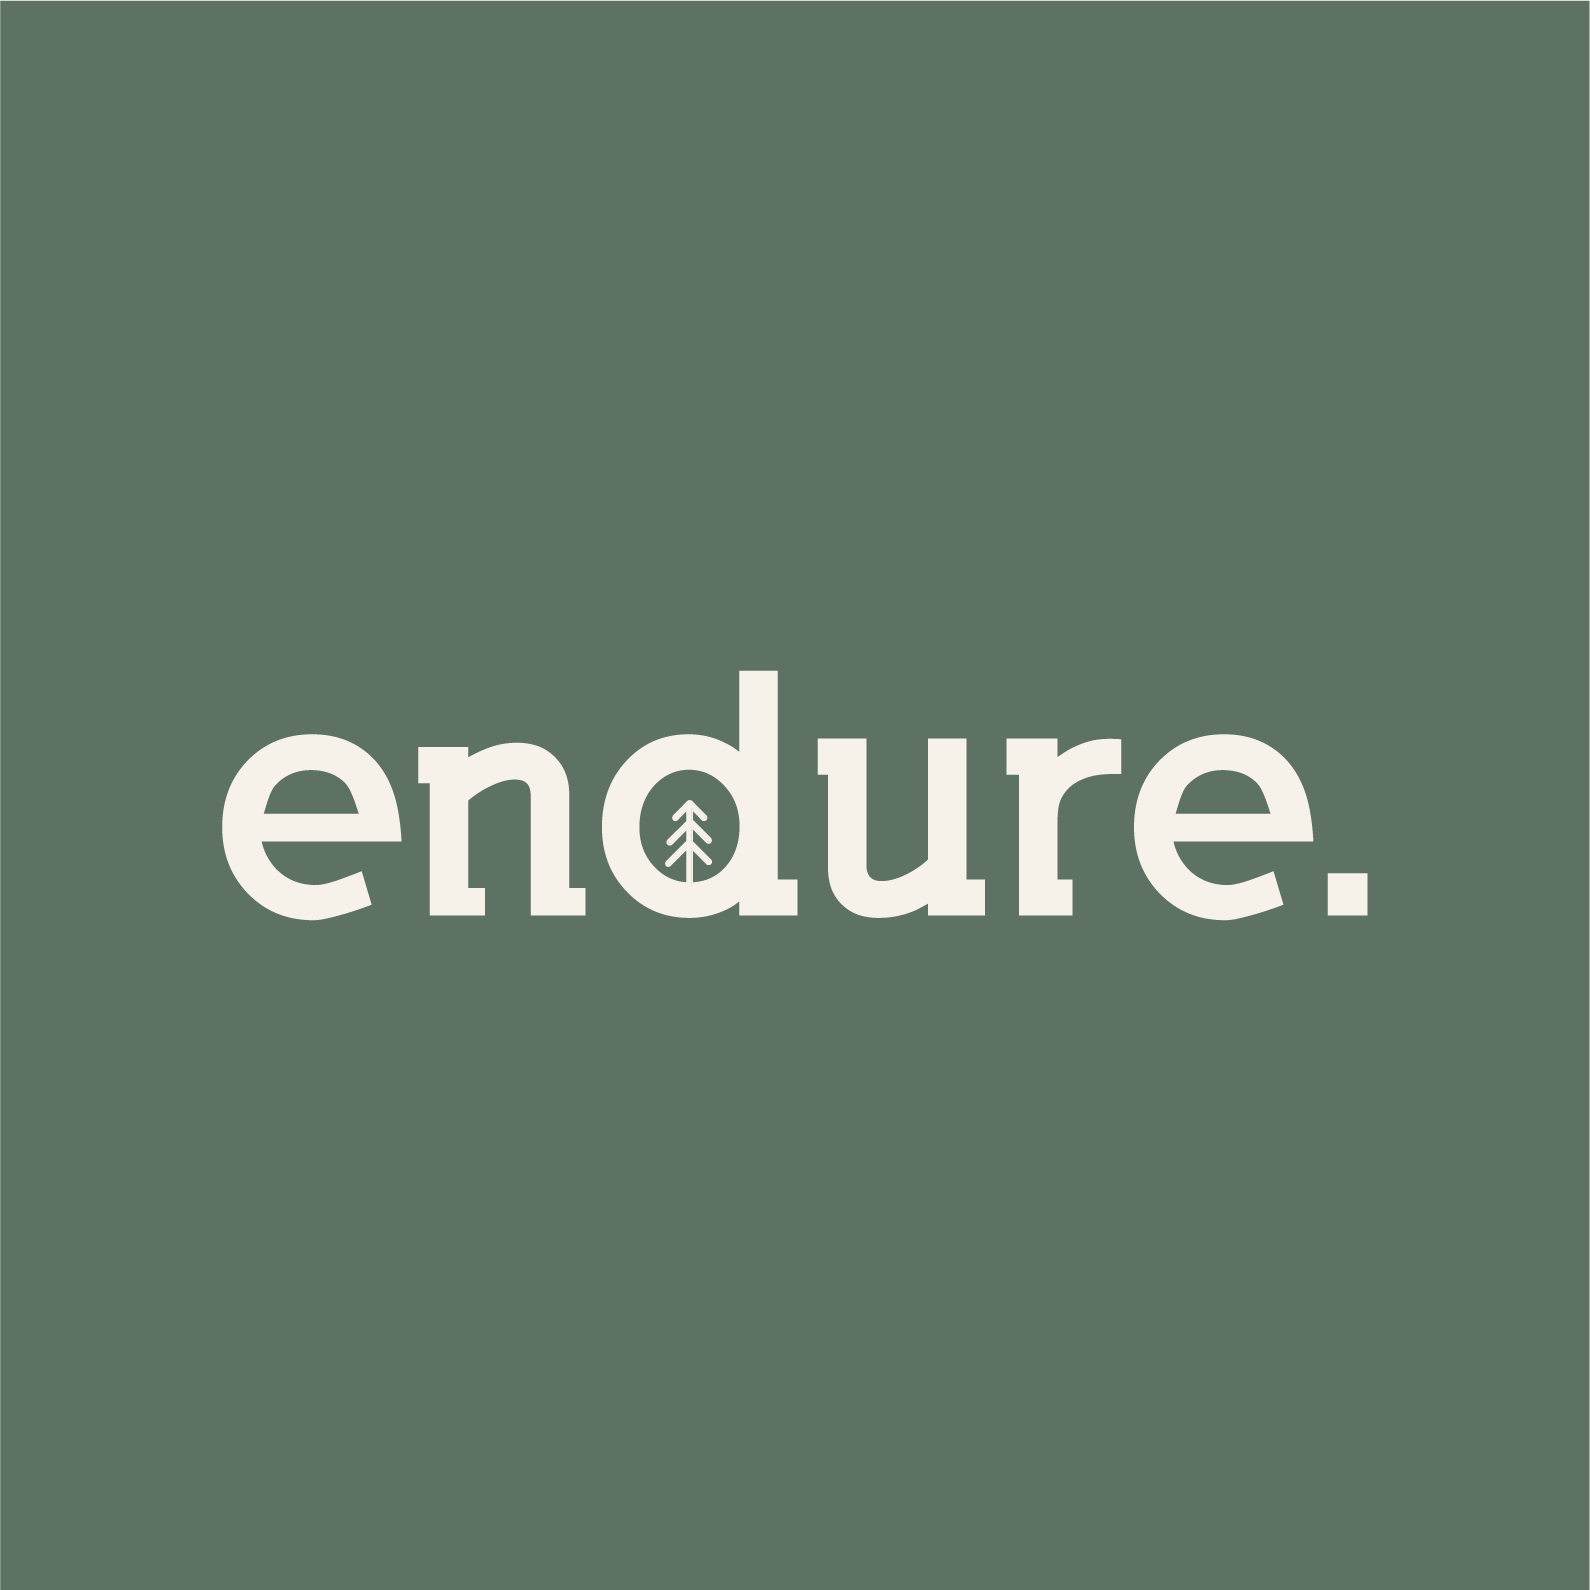 Endure Life's account image